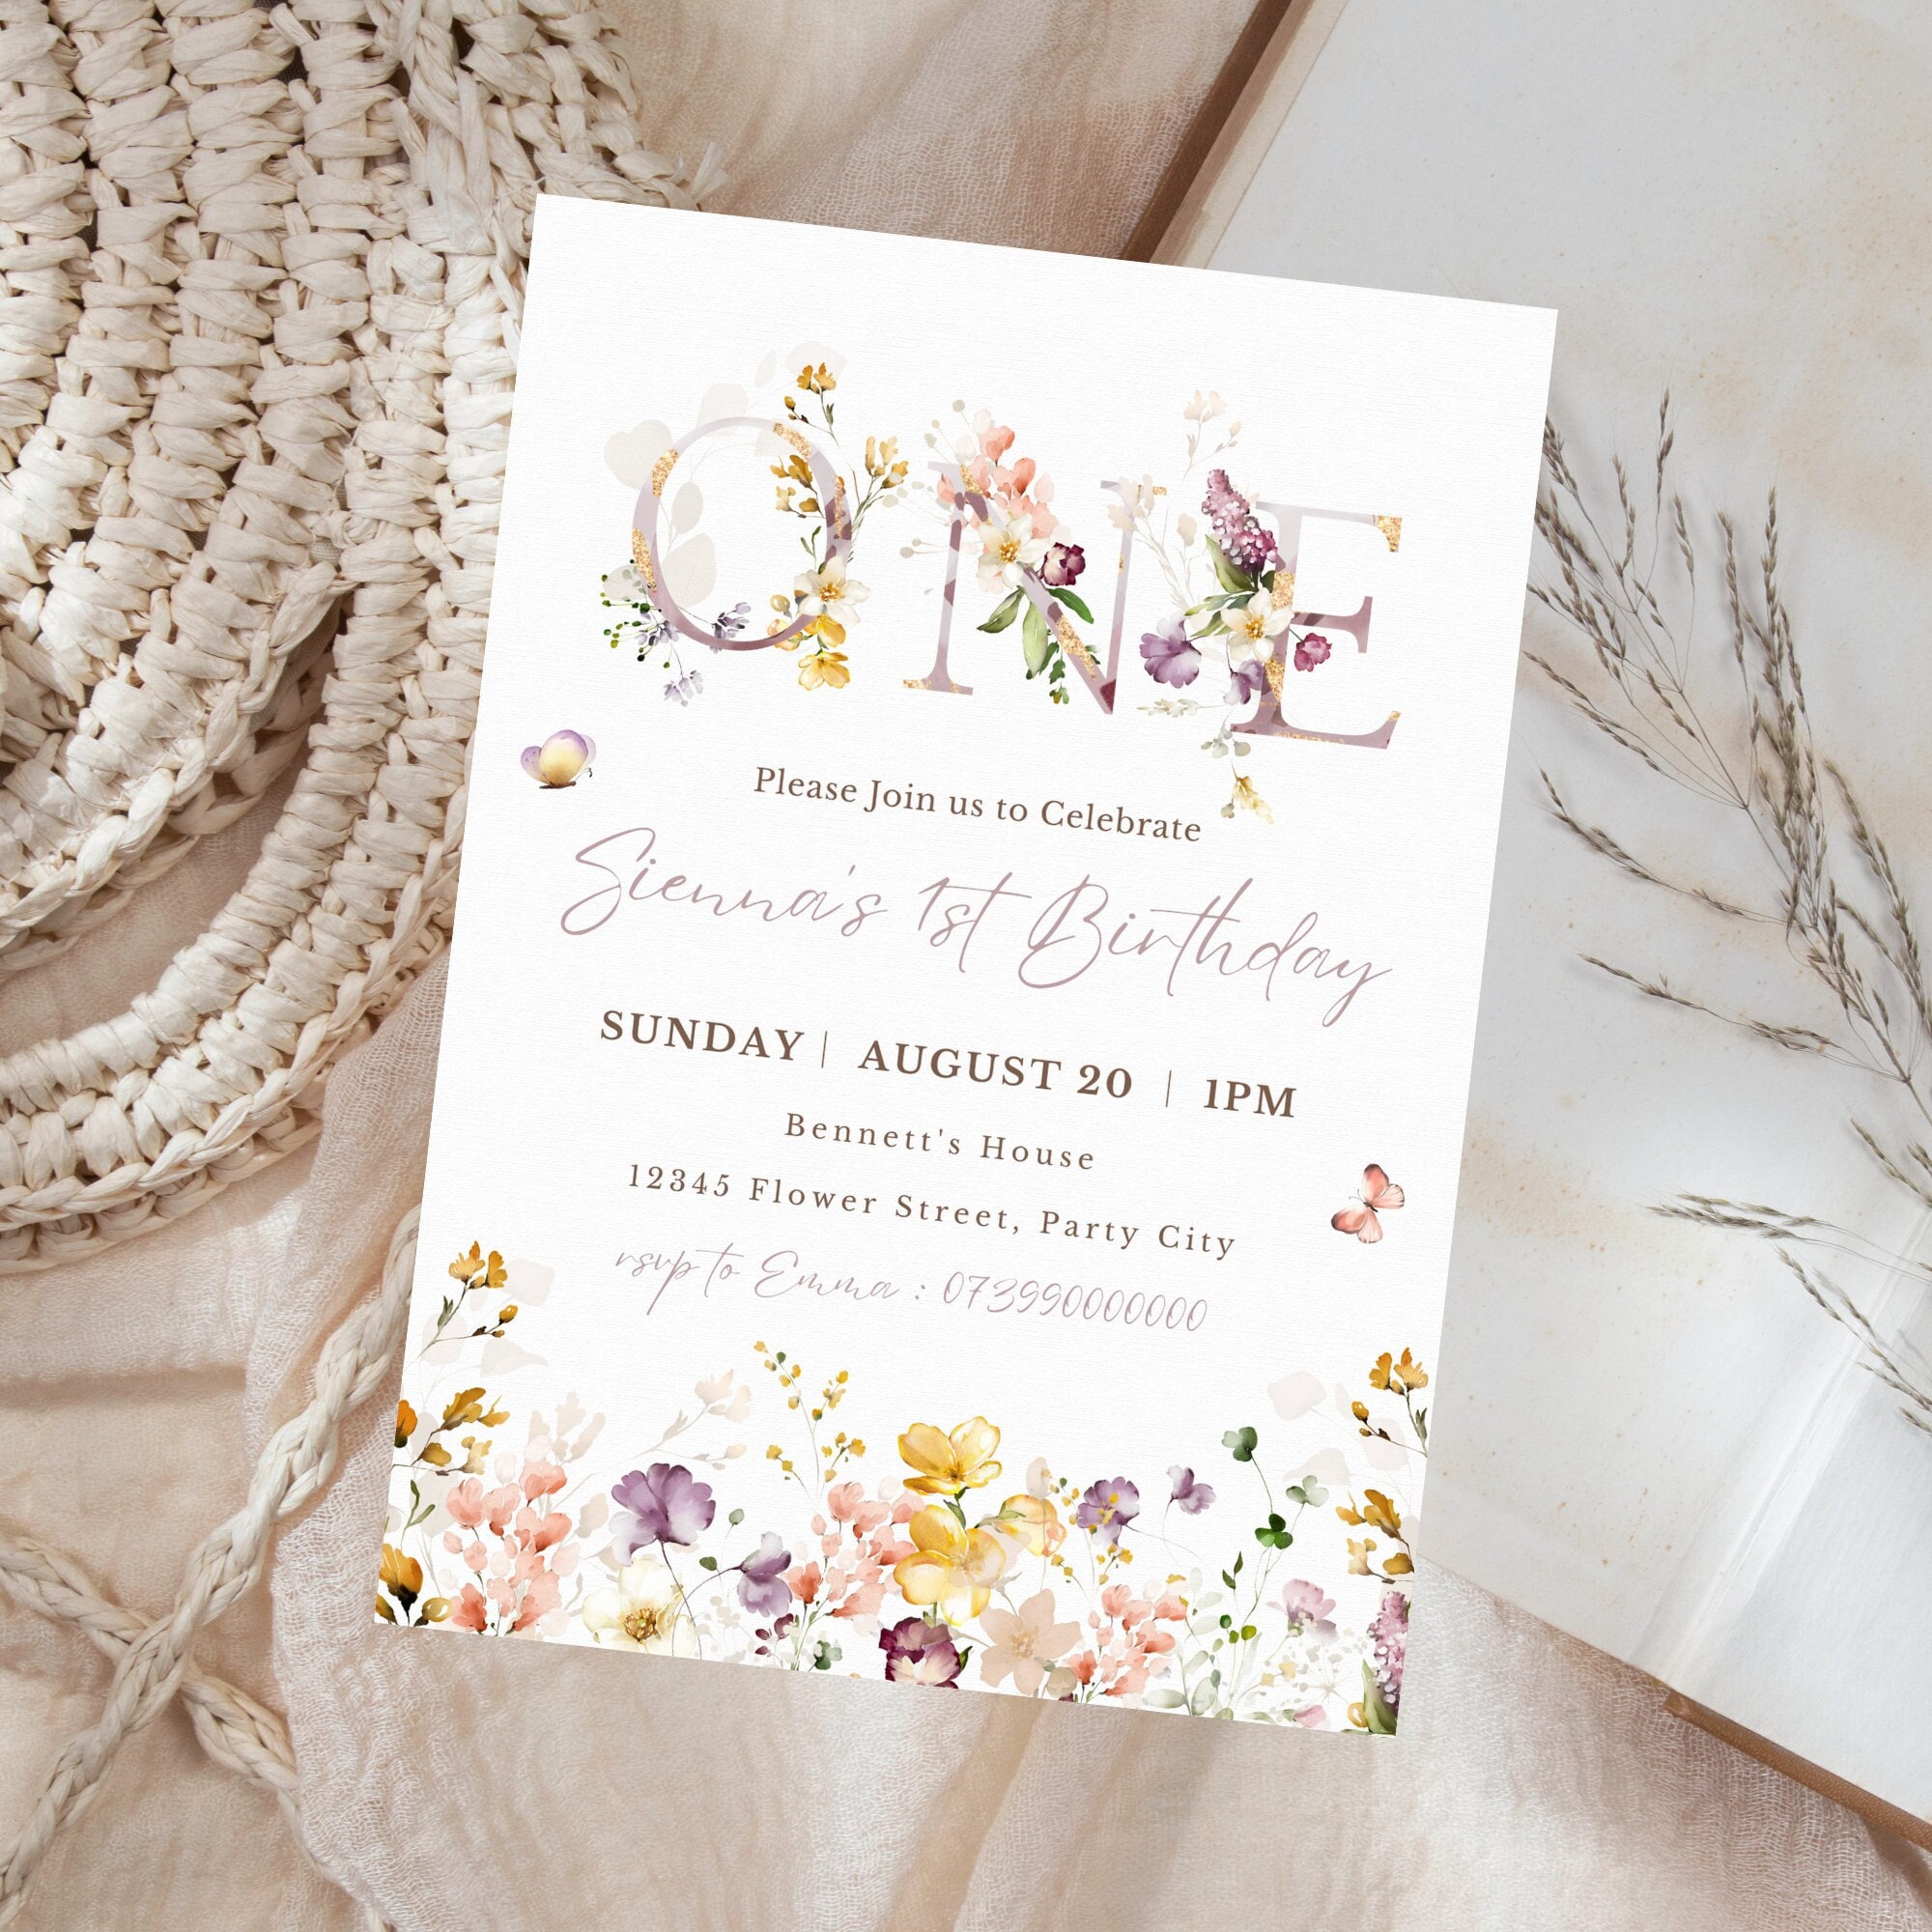 Dior Event Invitation  Business card design, Name card design